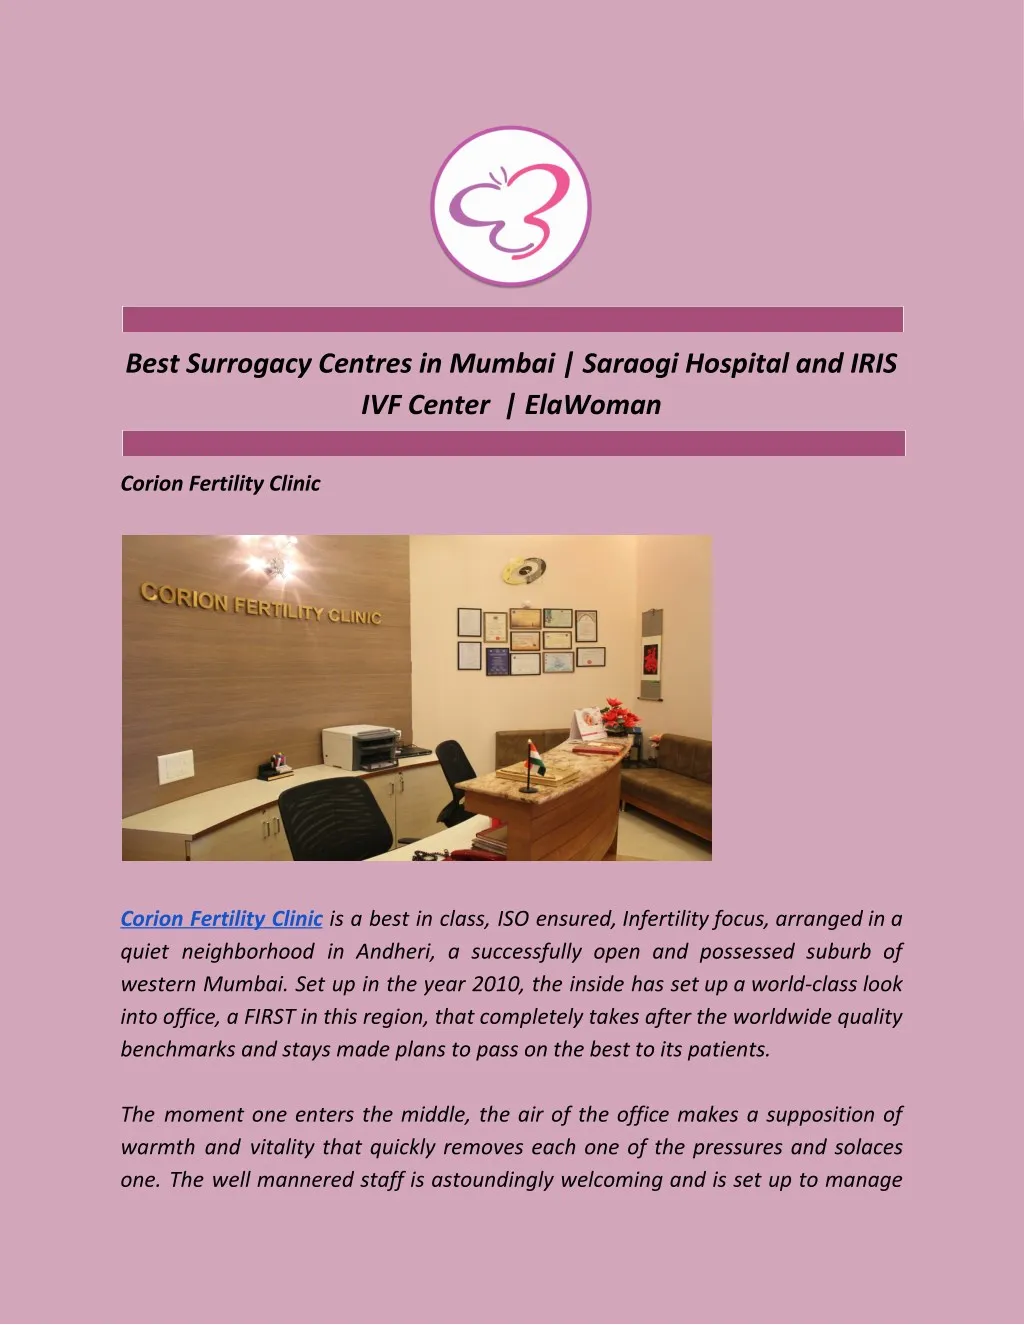 best surrogacy centres in mumbai saraogi hospital